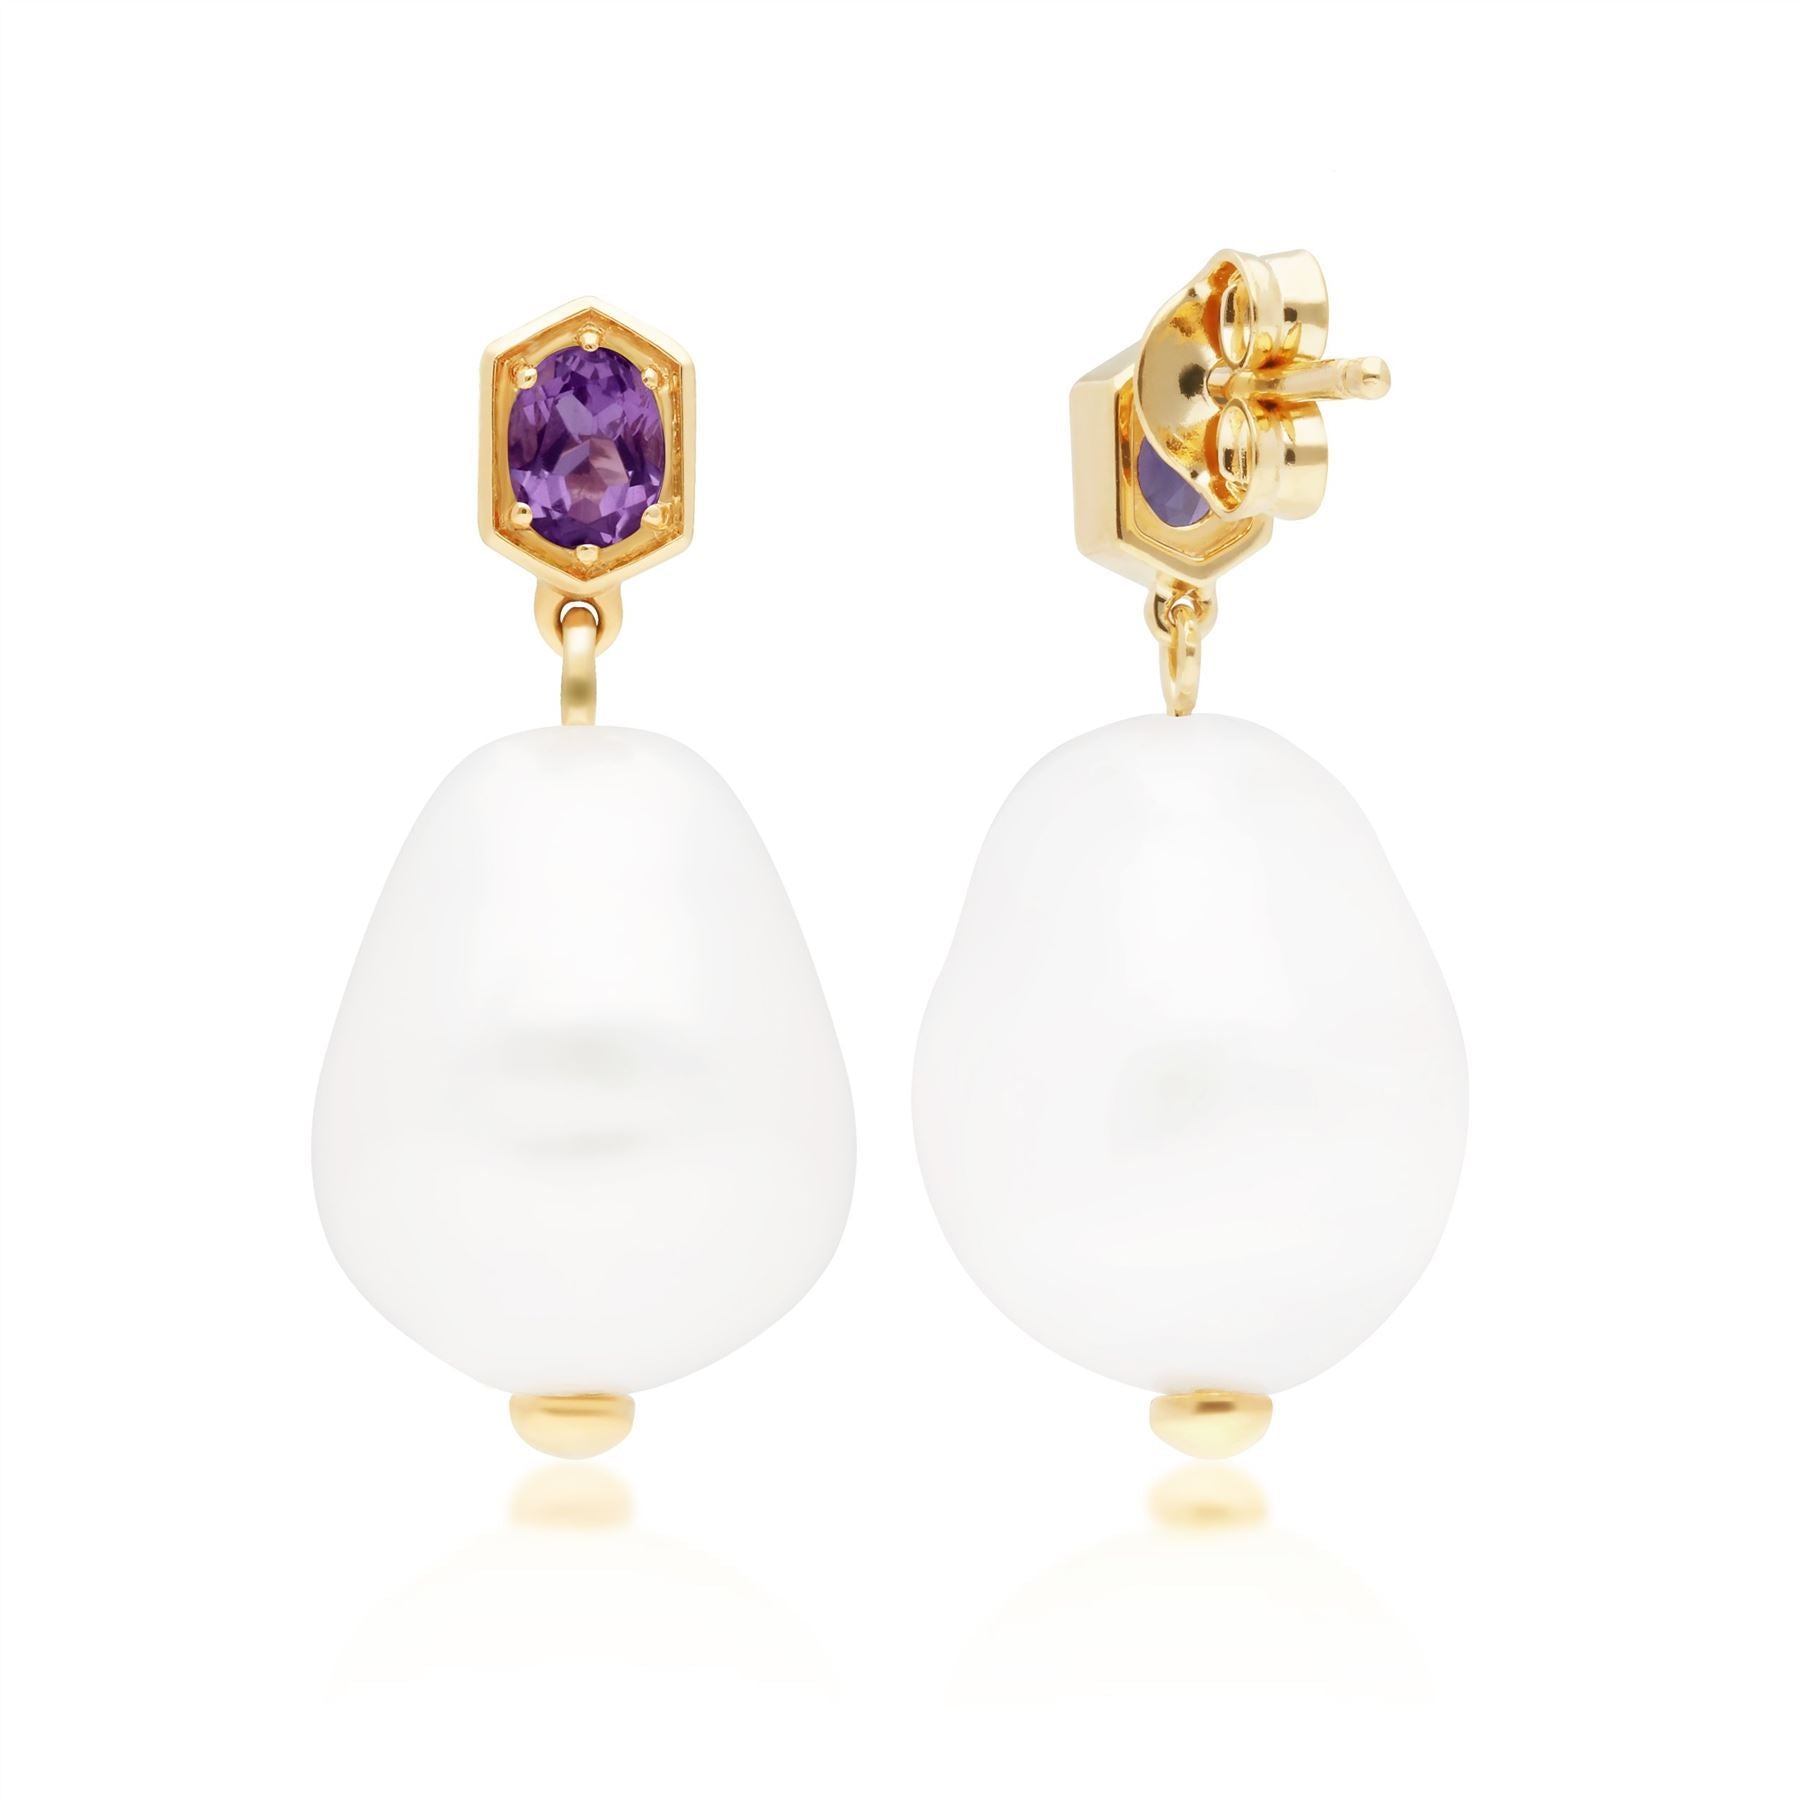 Modern Baroque Pearl & Amethyst Drop Earrings in Gold Plated Sterling Silver